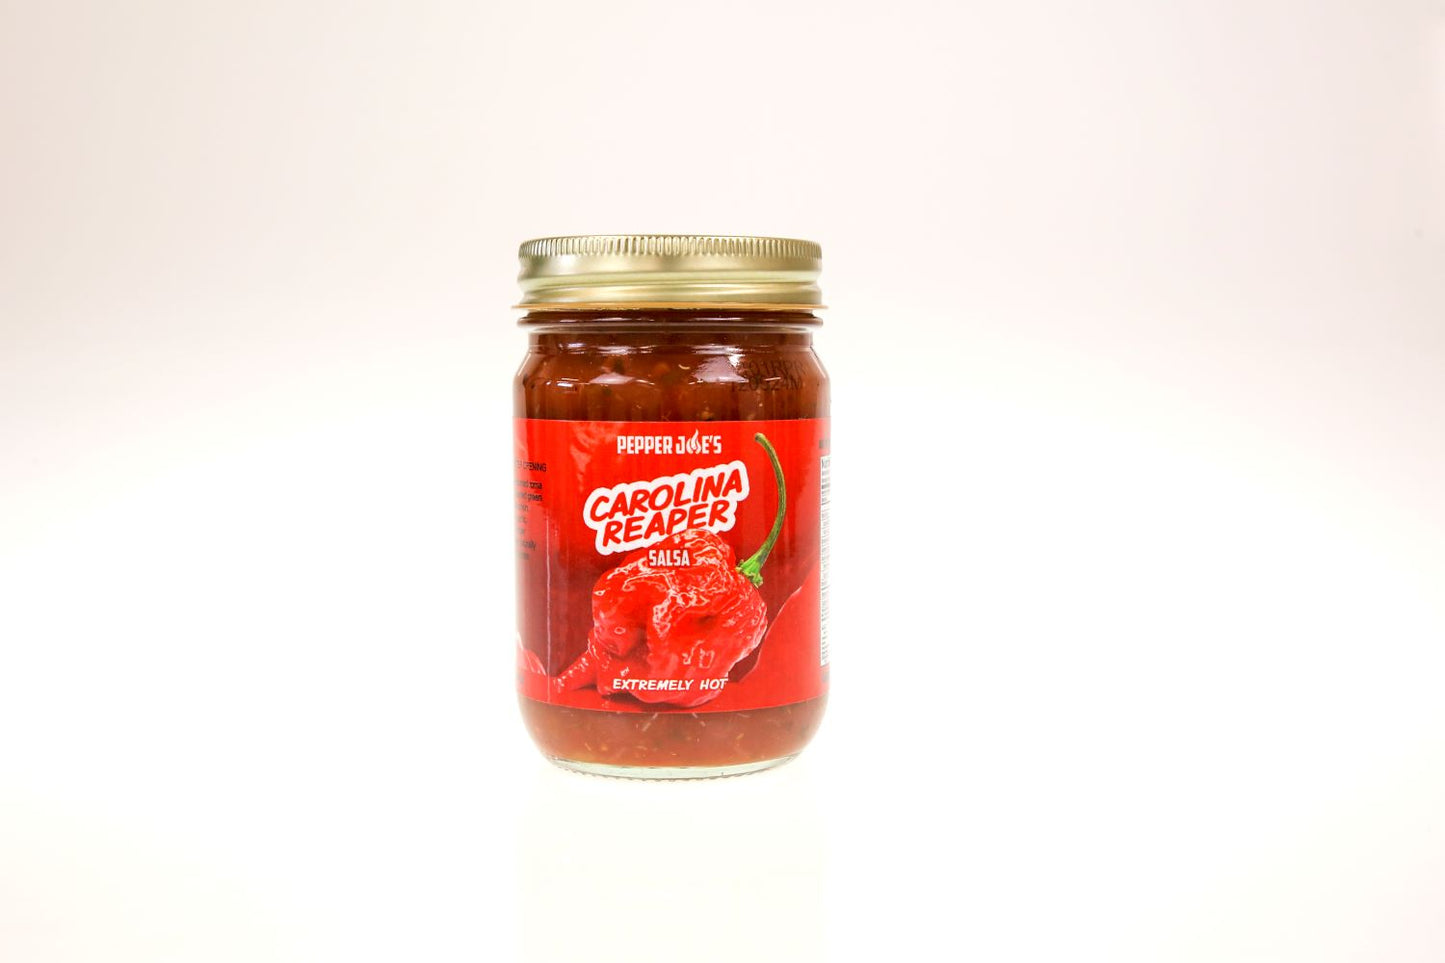 Pepper Joe's Sweet and Spicy Salsa 5-Pack - spicy salsa - carolina reaper salsa jar on white background